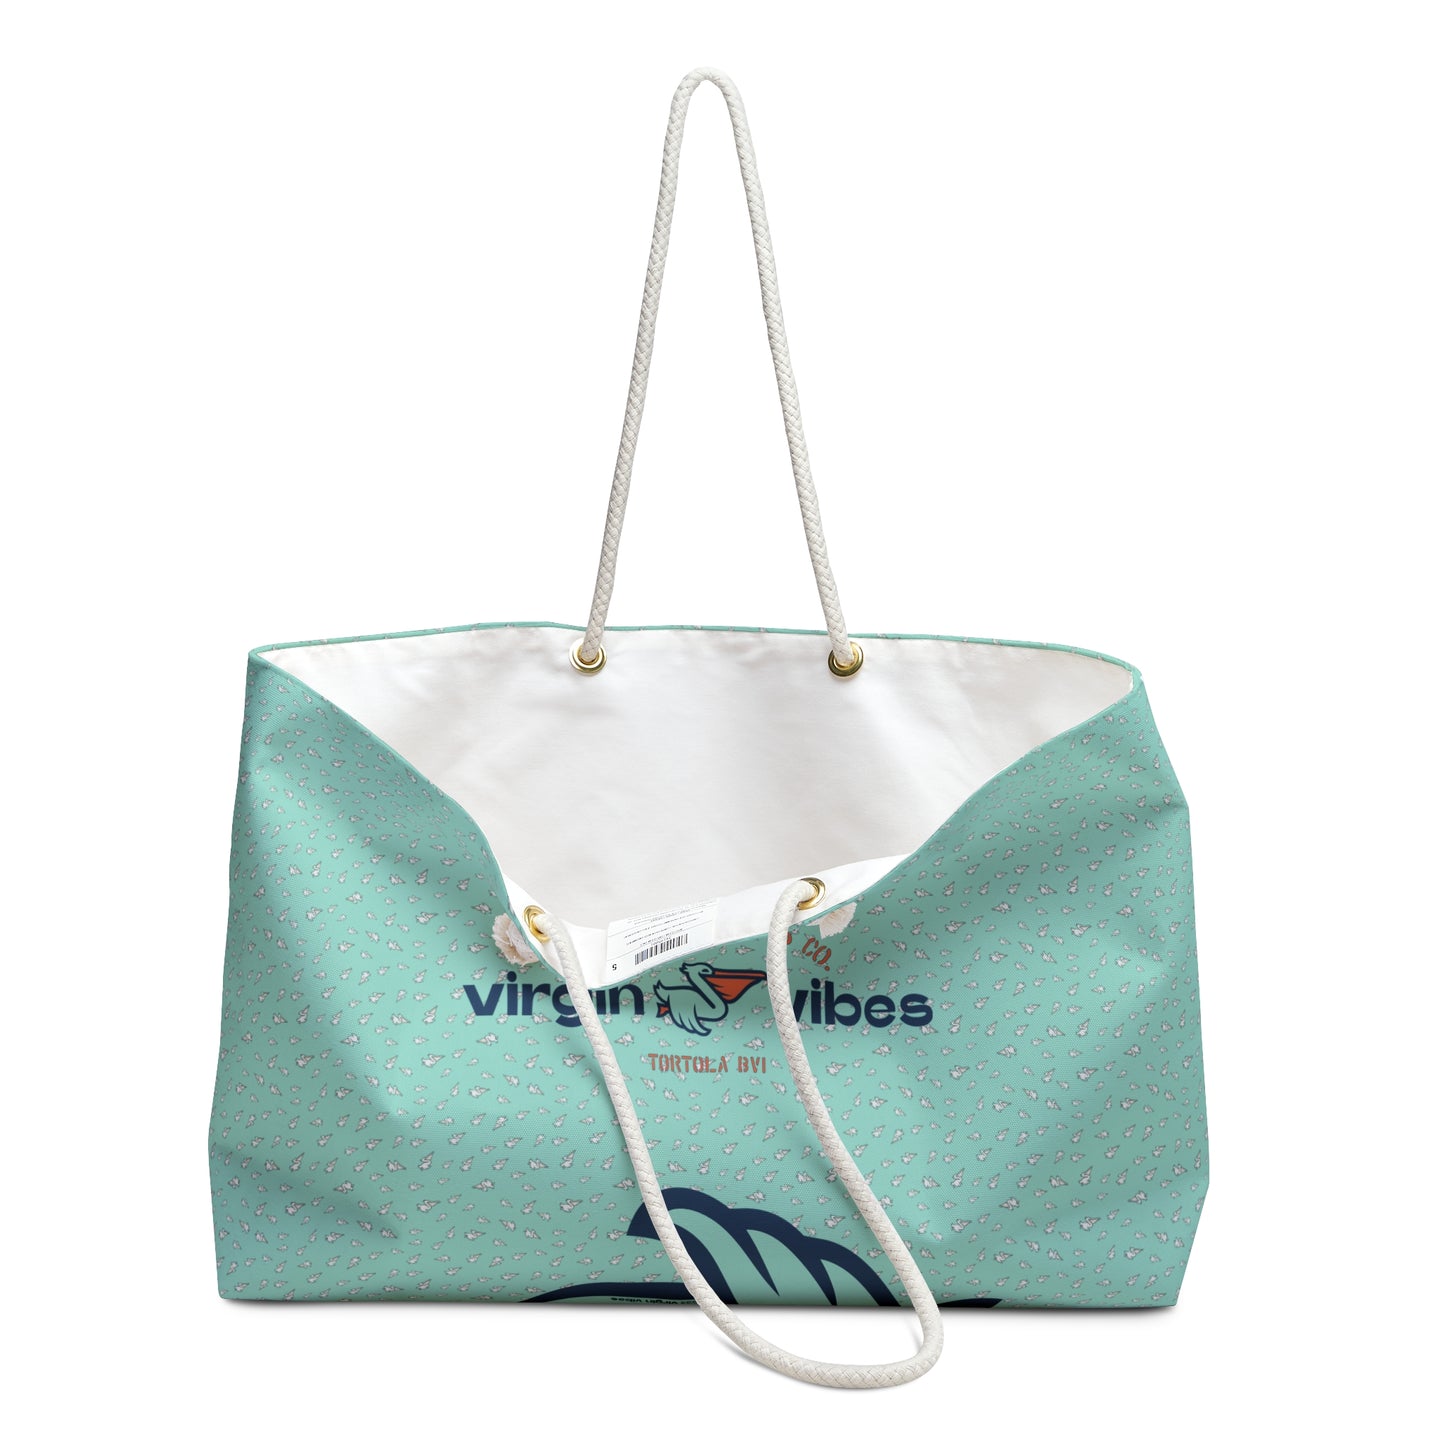 "Virgin Vibes | BVI" Beach Bag